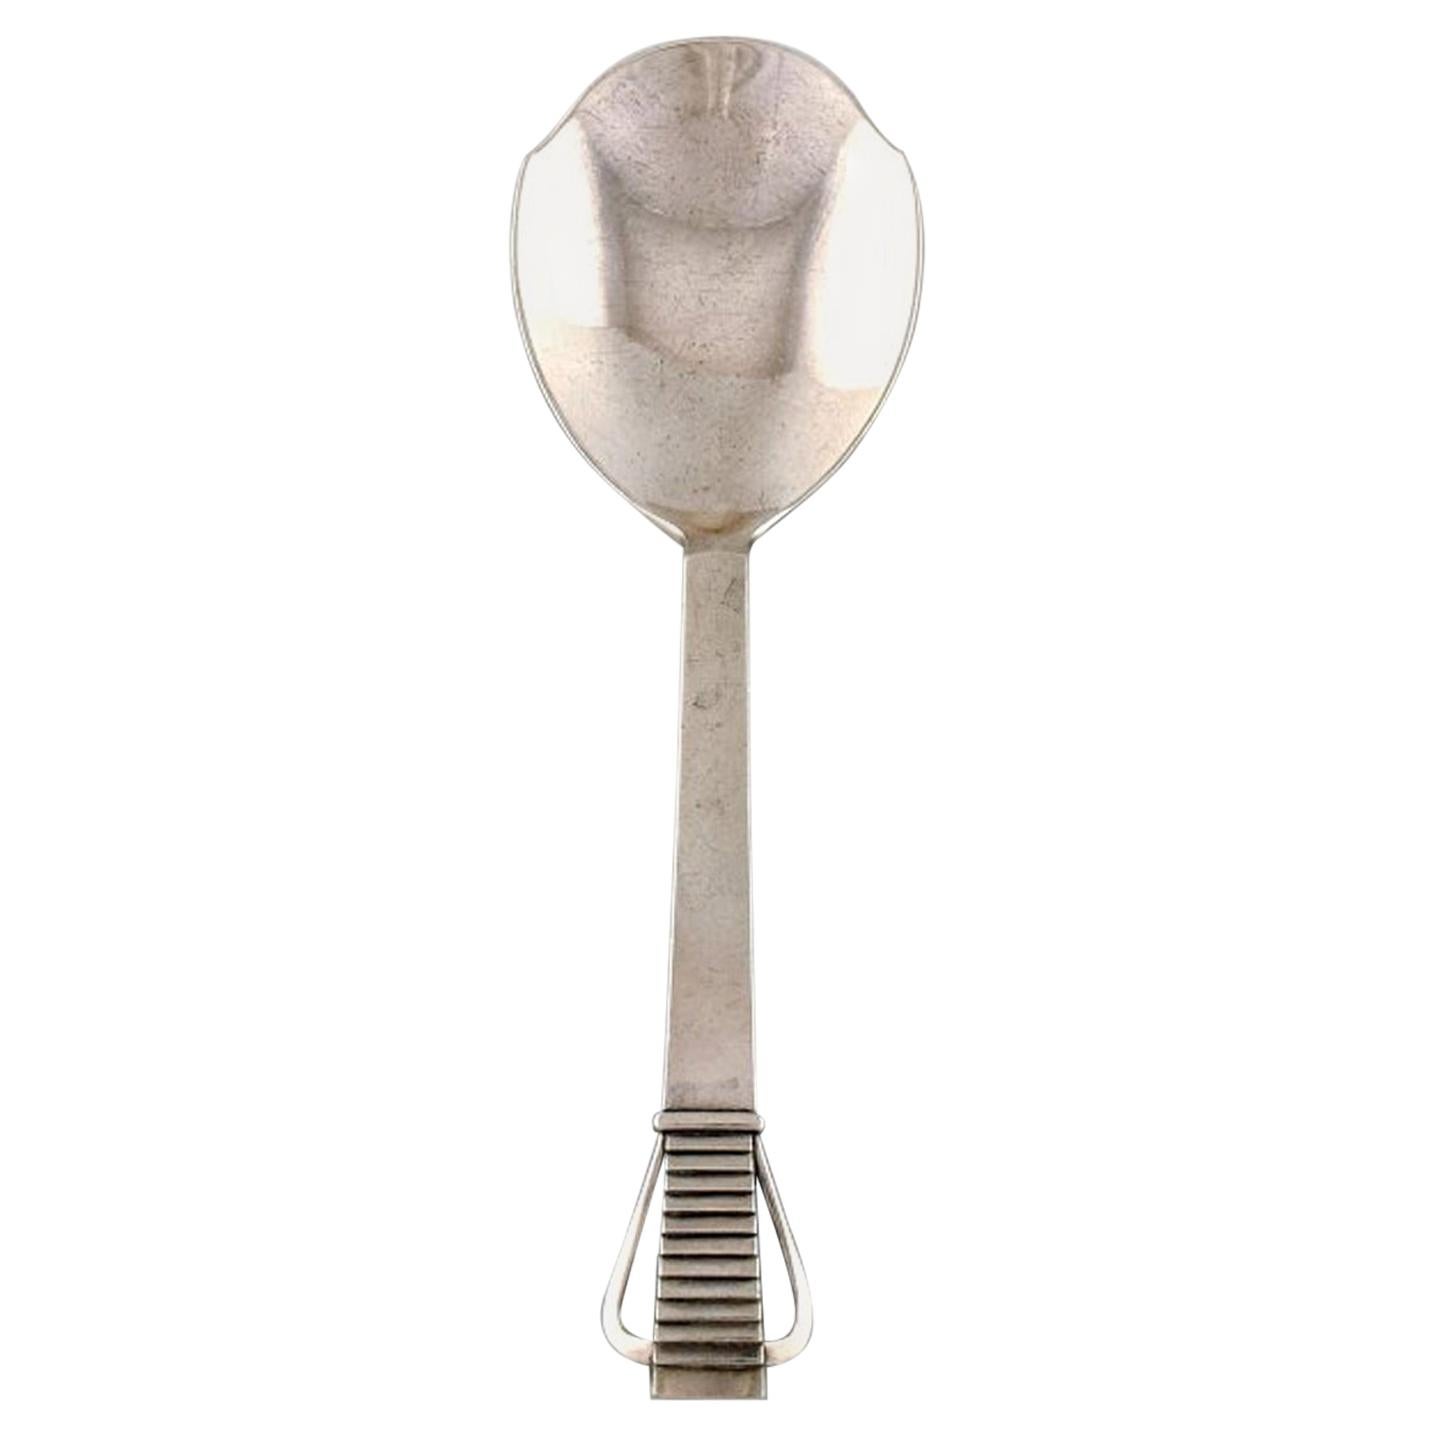 Georg Jensen Parallel, Early Serving Spoon in Sterling Silver